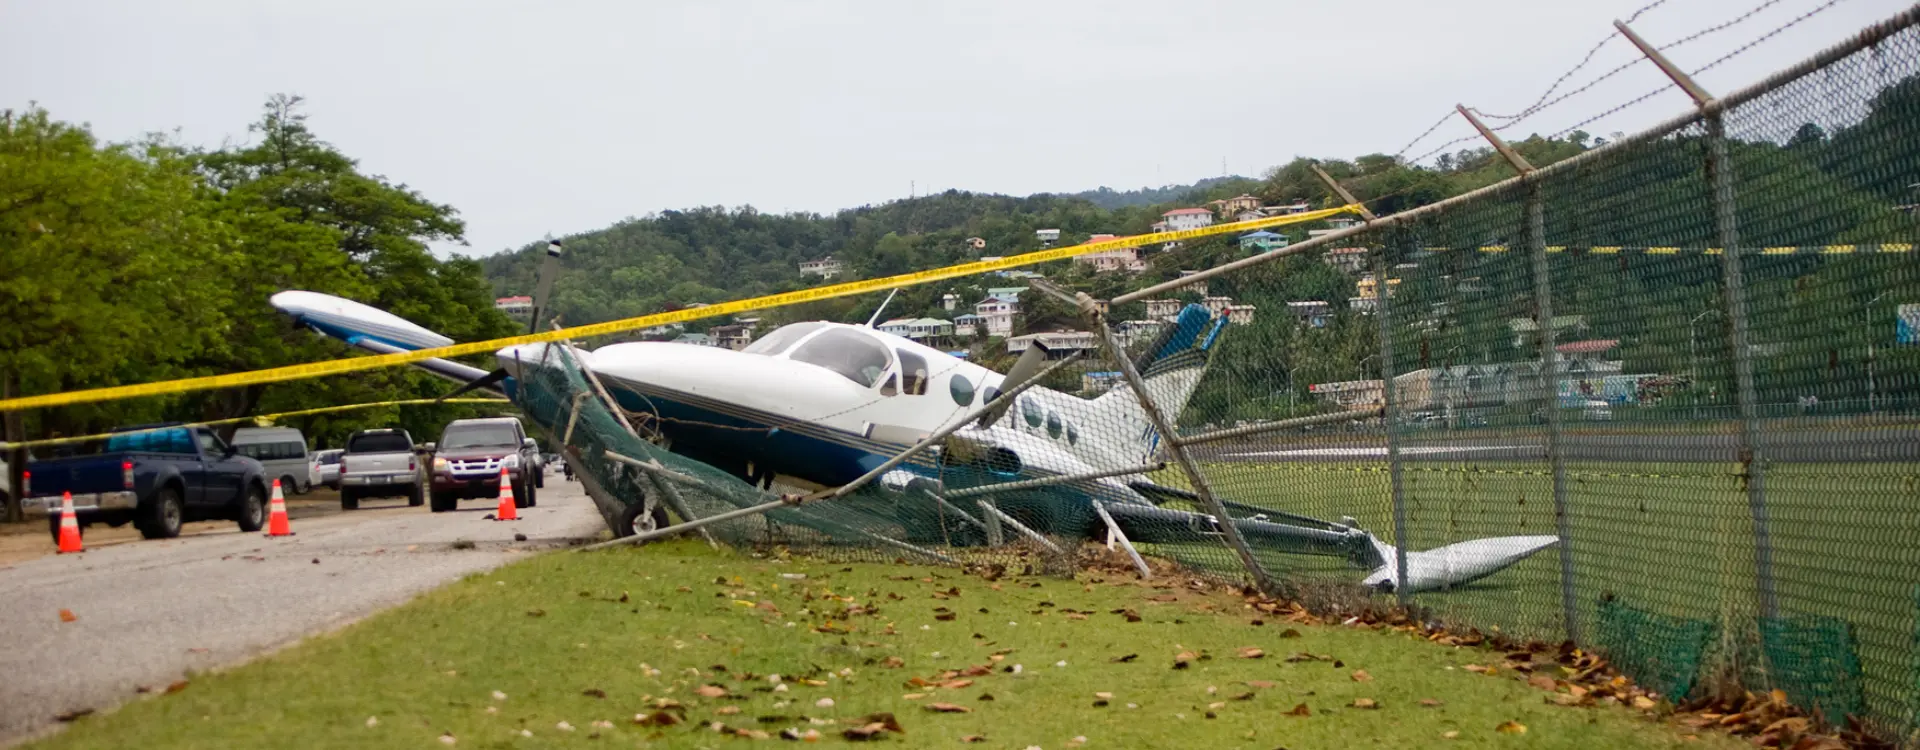 mendocino plane crash